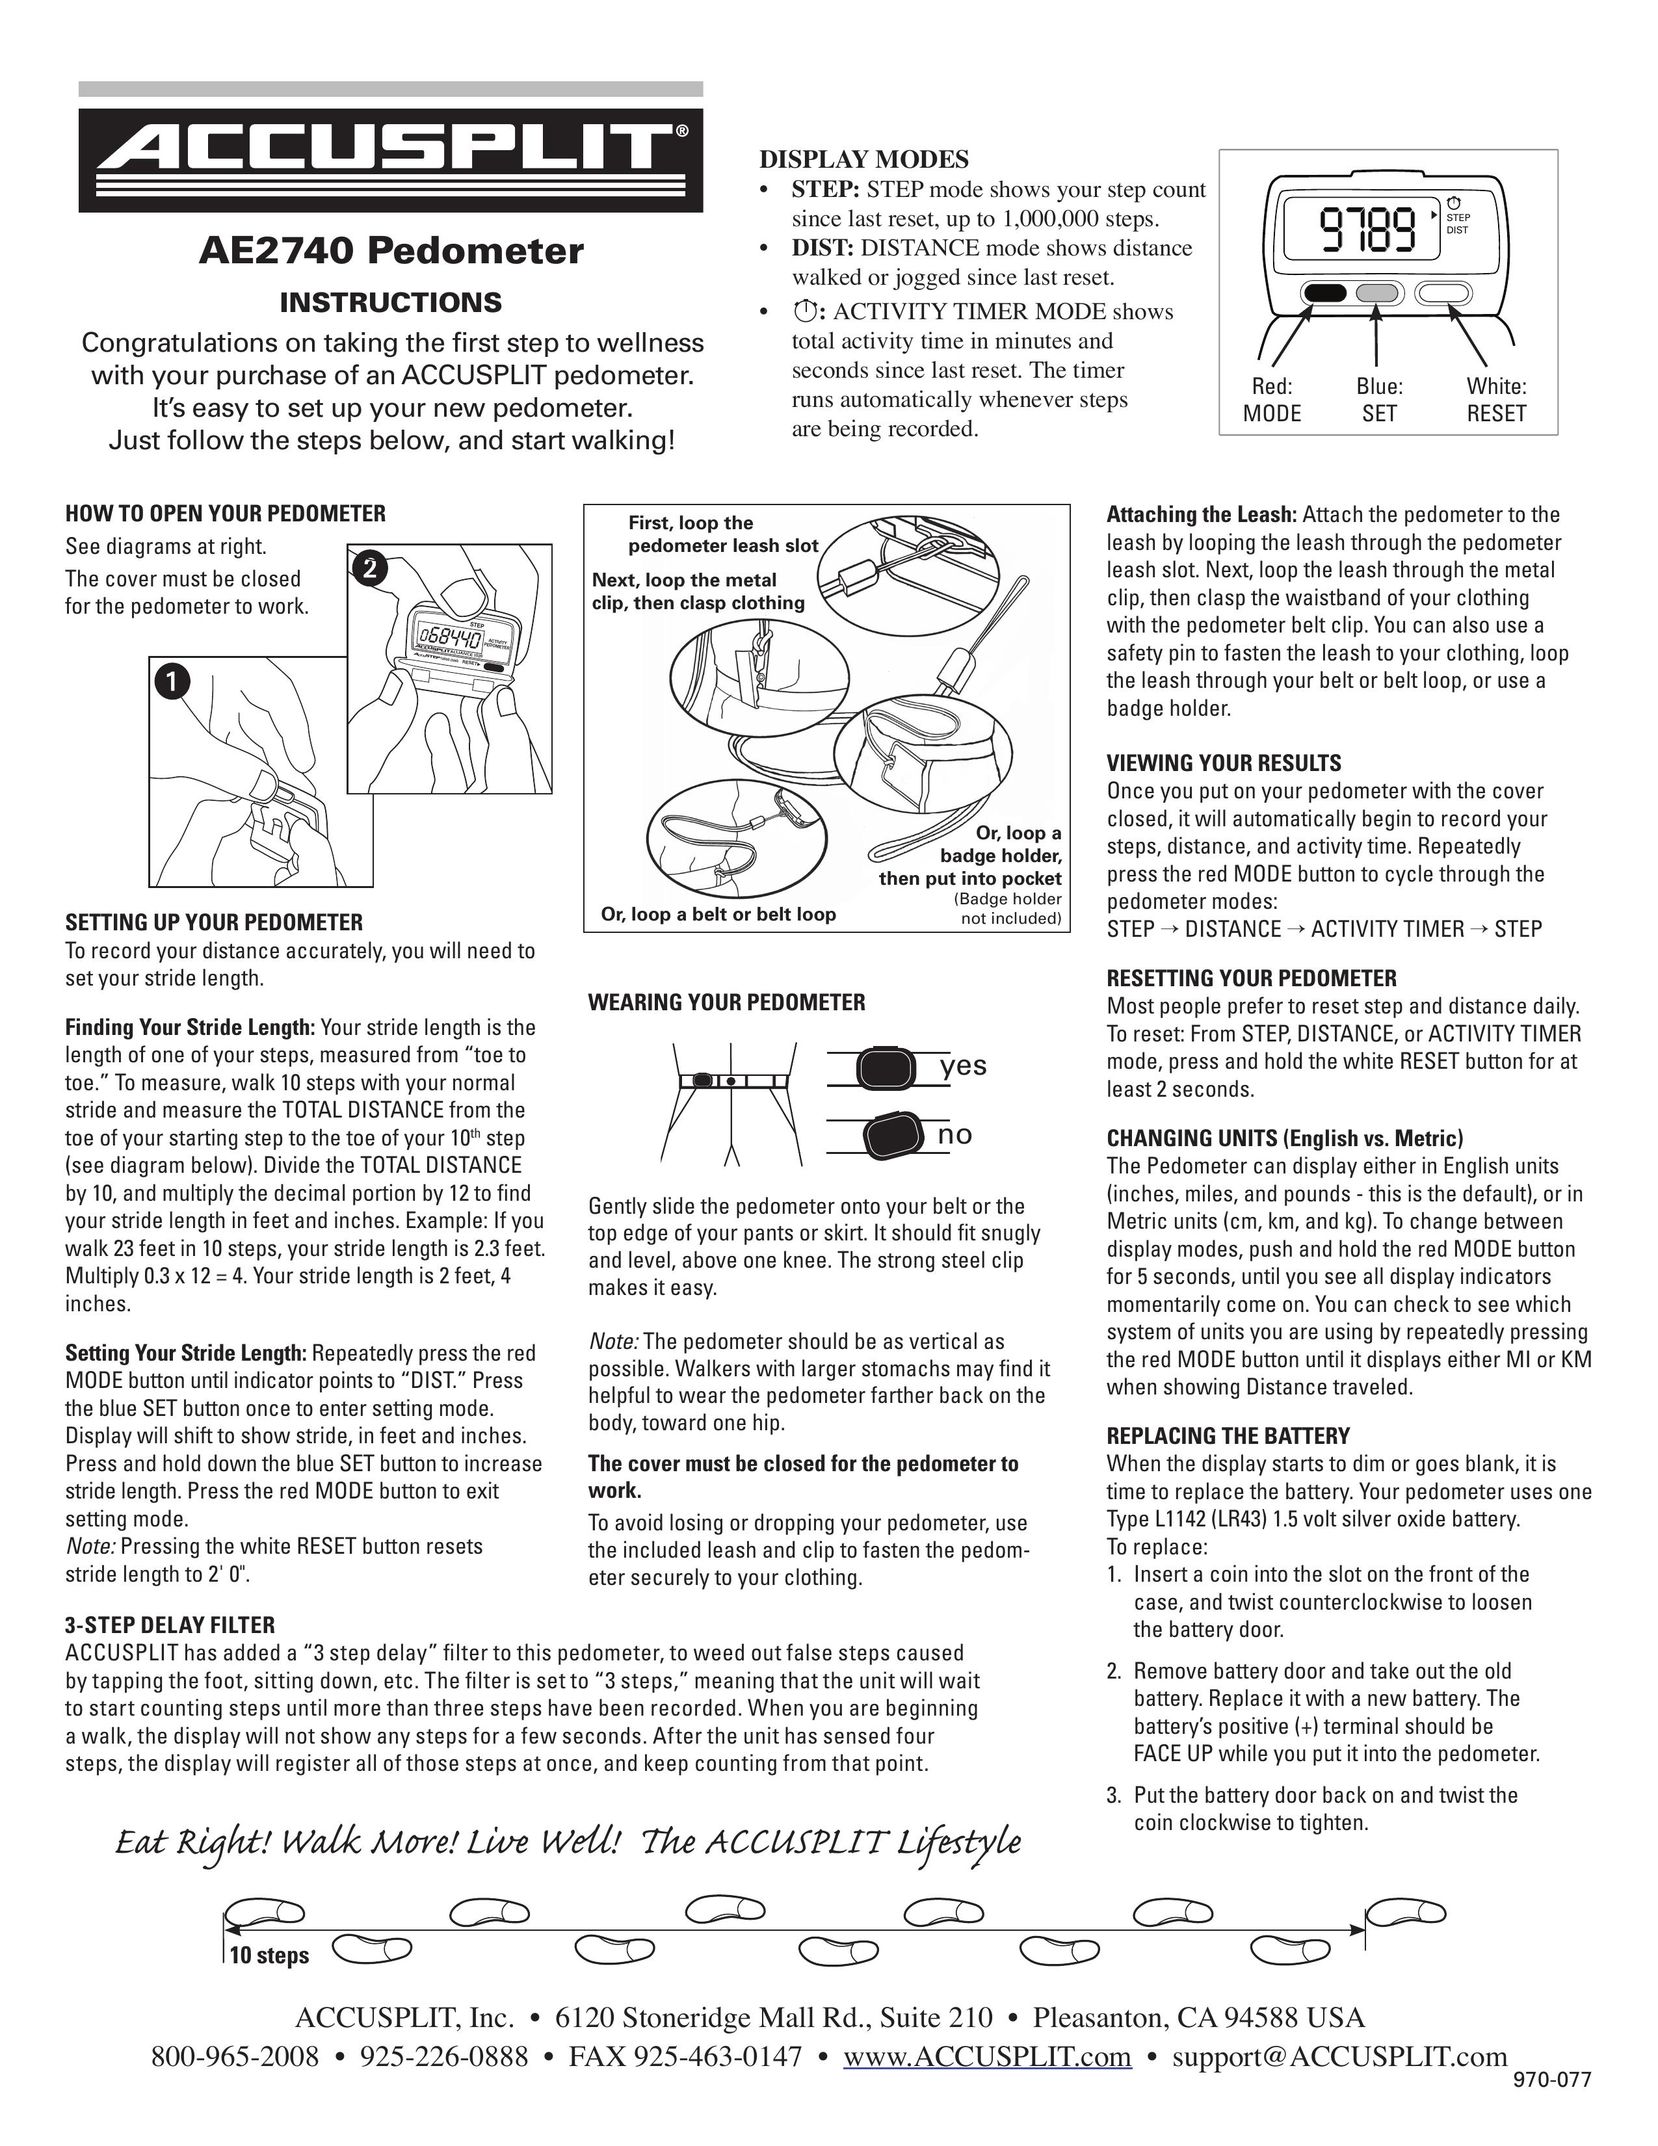 Accusplit AE2740 Fitness Electronics User Manual